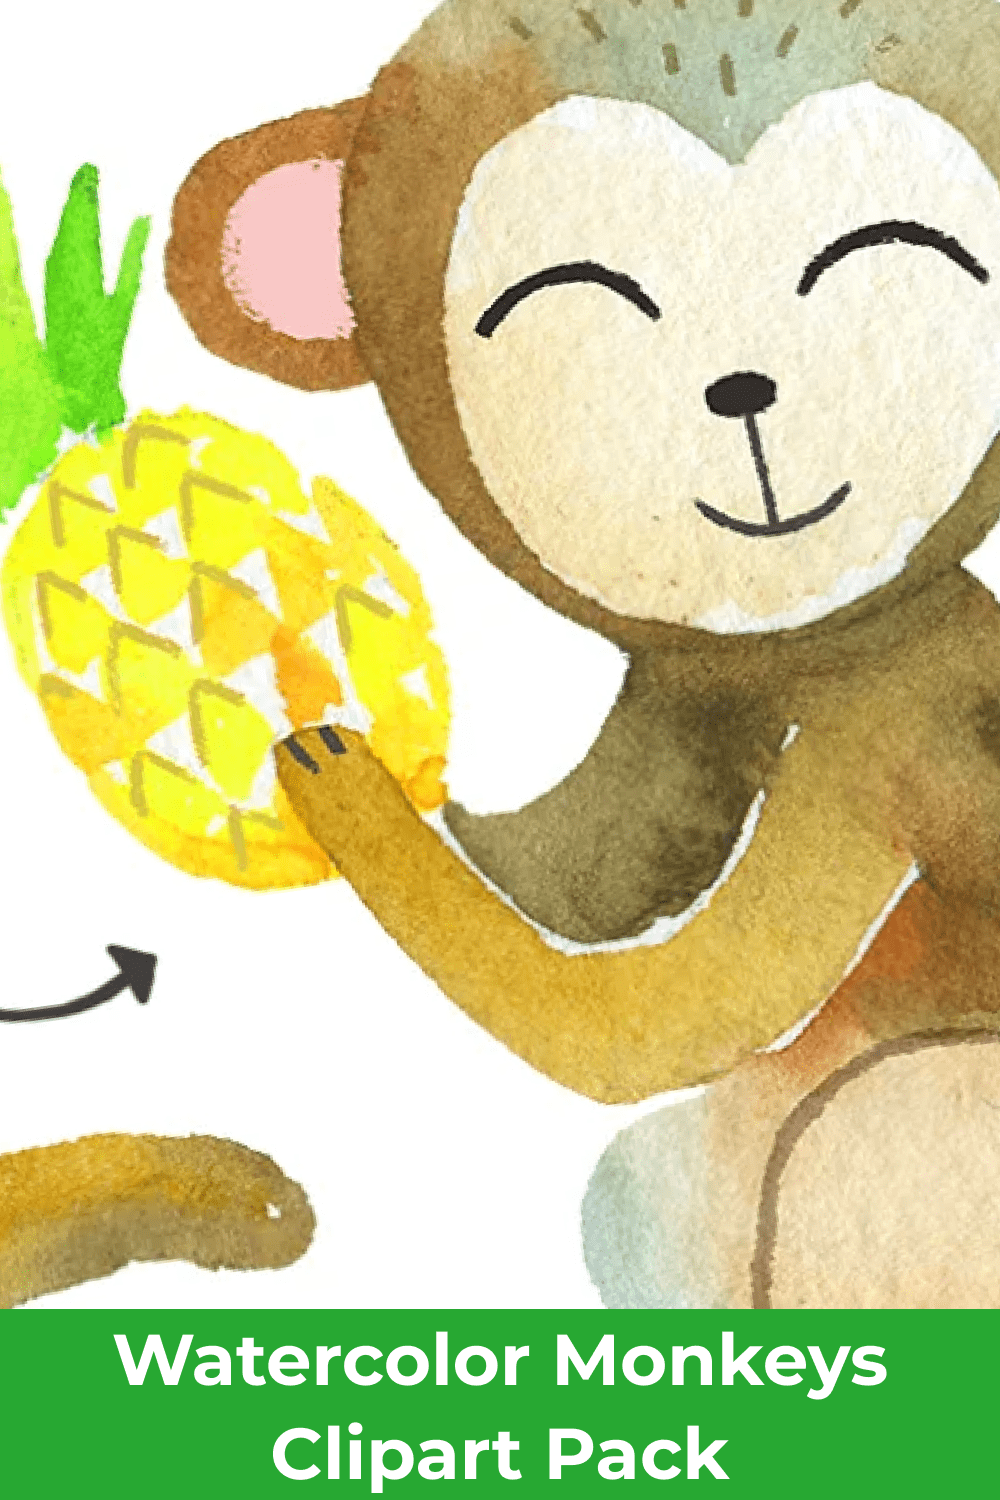 Watercolor Monkeys Clipart Pack.